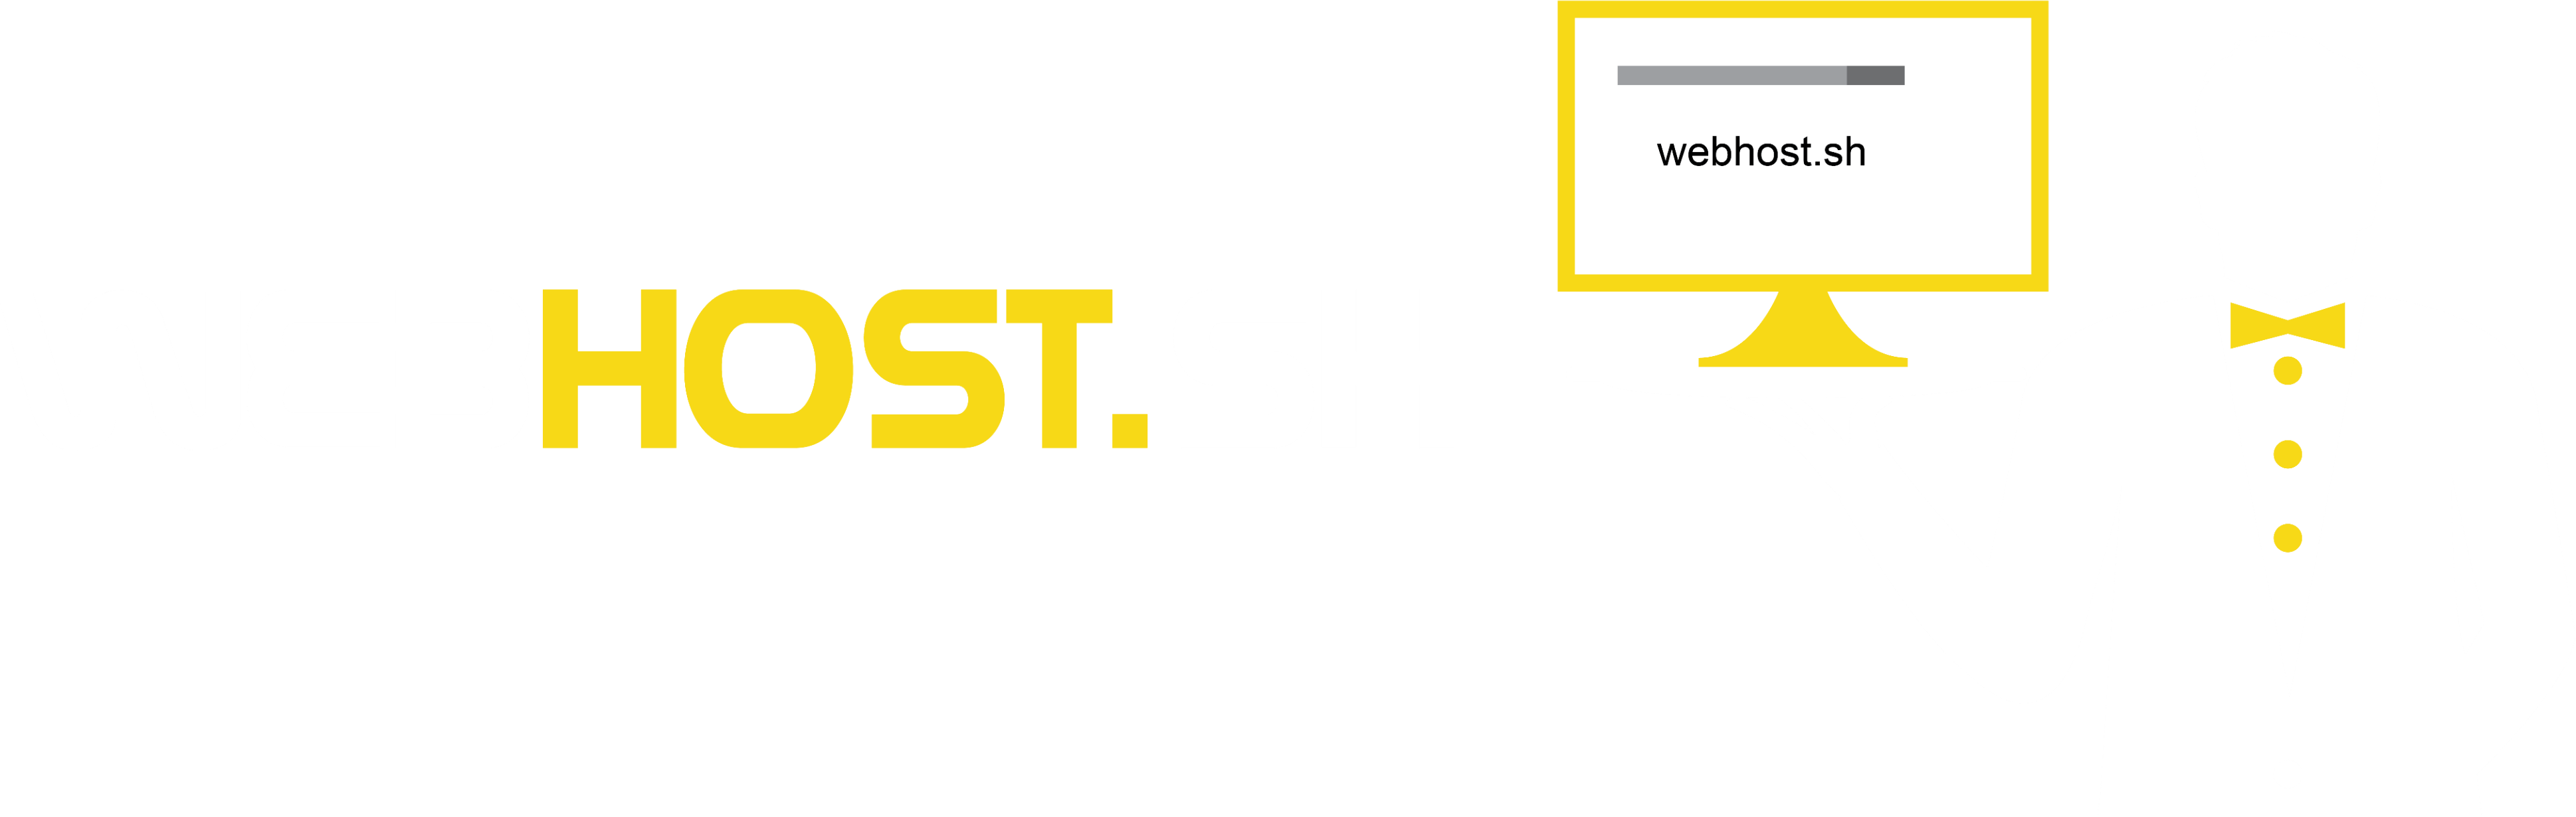 Webhost.sh